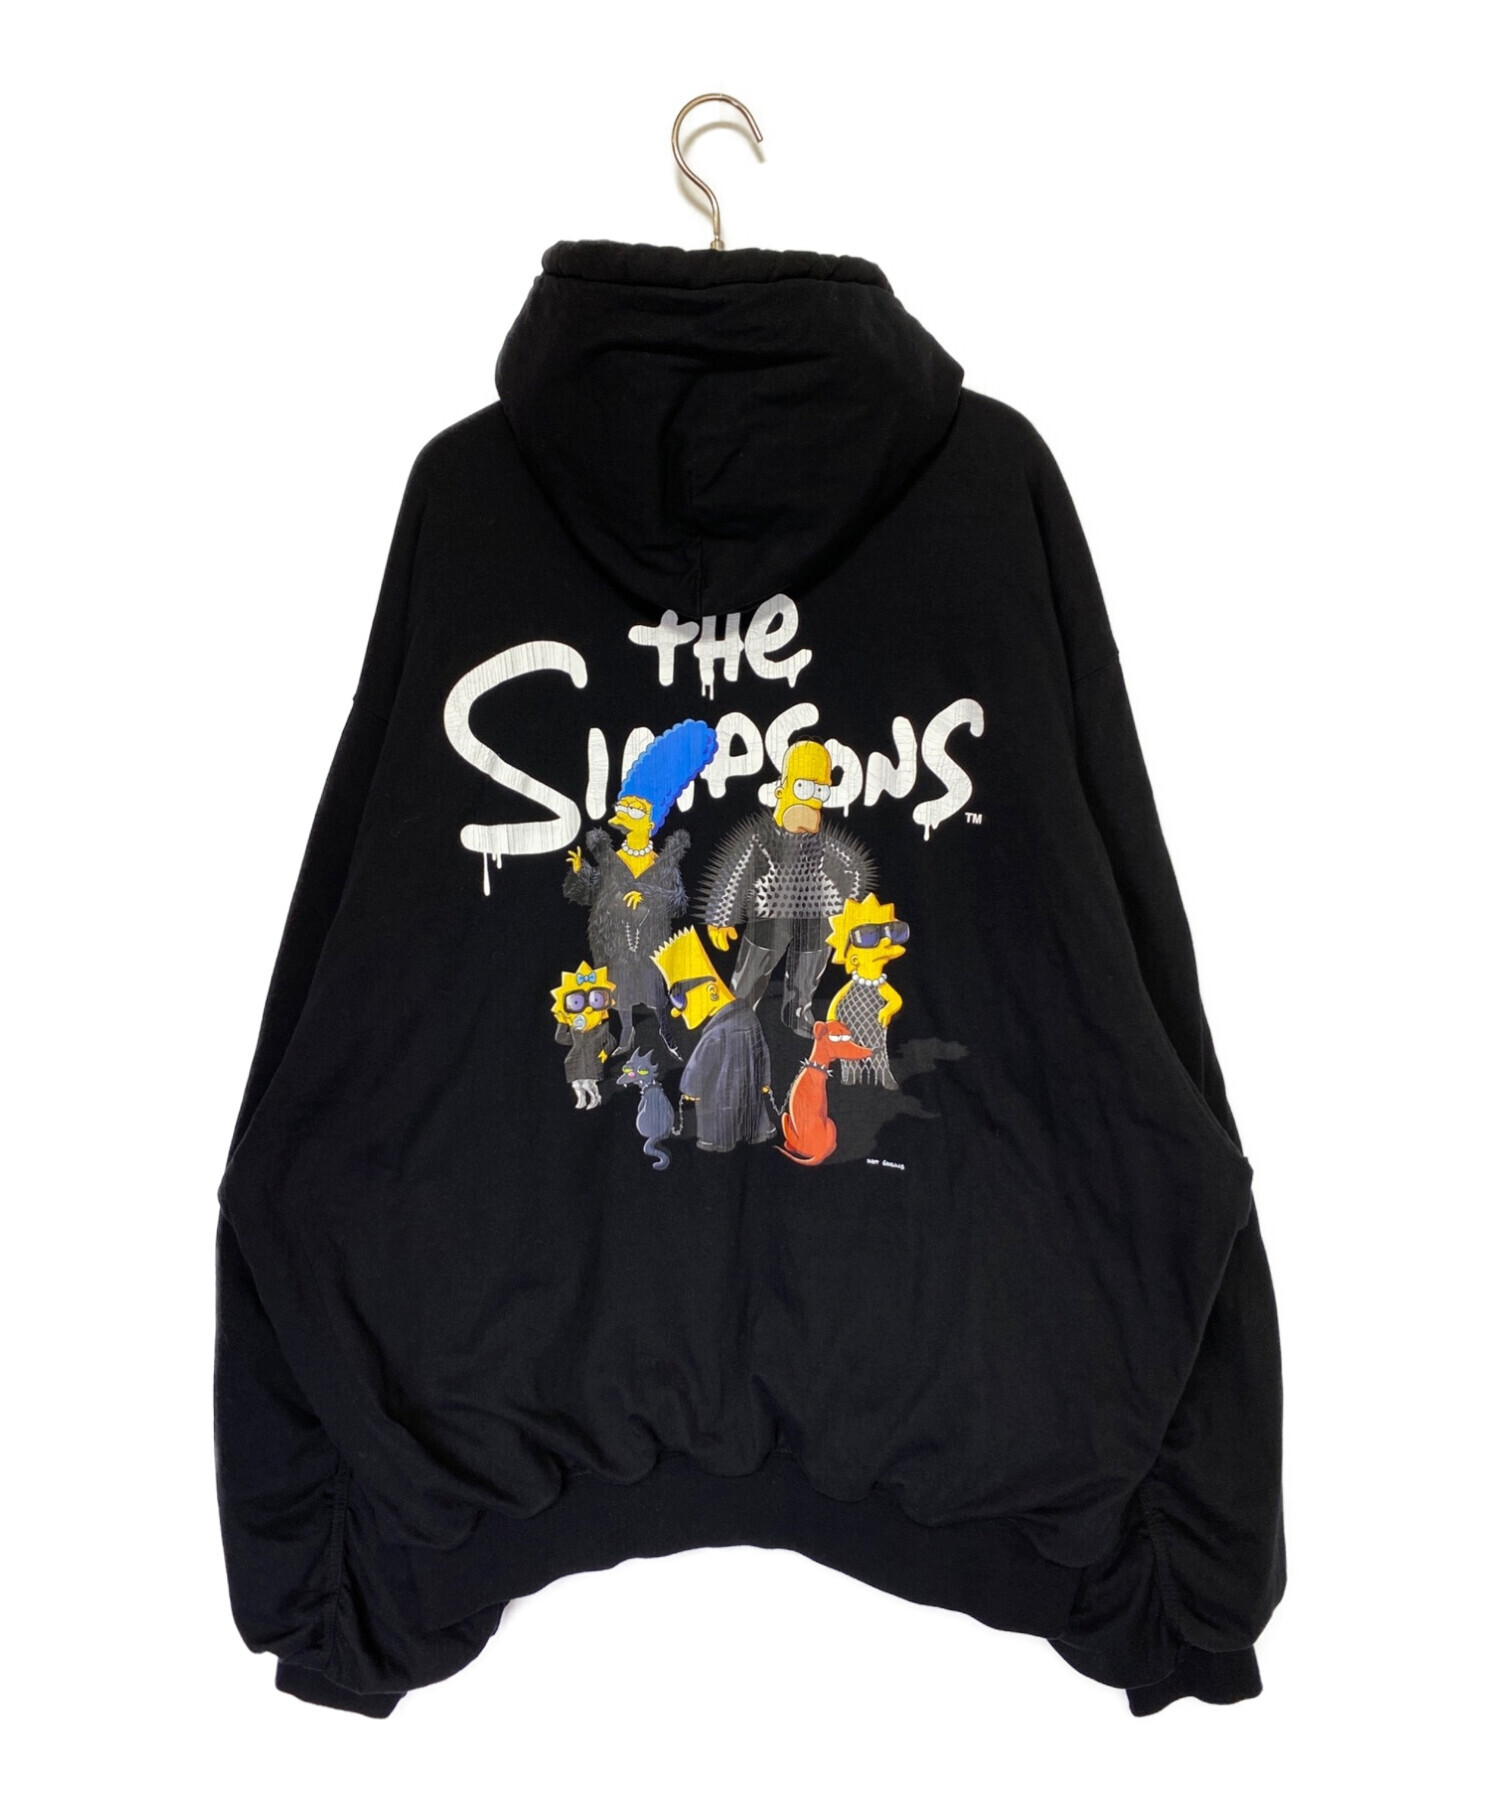 BALENCIAGA (バレンシアガ) The Simpsons (ザ シンプソンズ) The Simpsons Bomber Jacket ブラック  サイズ:S